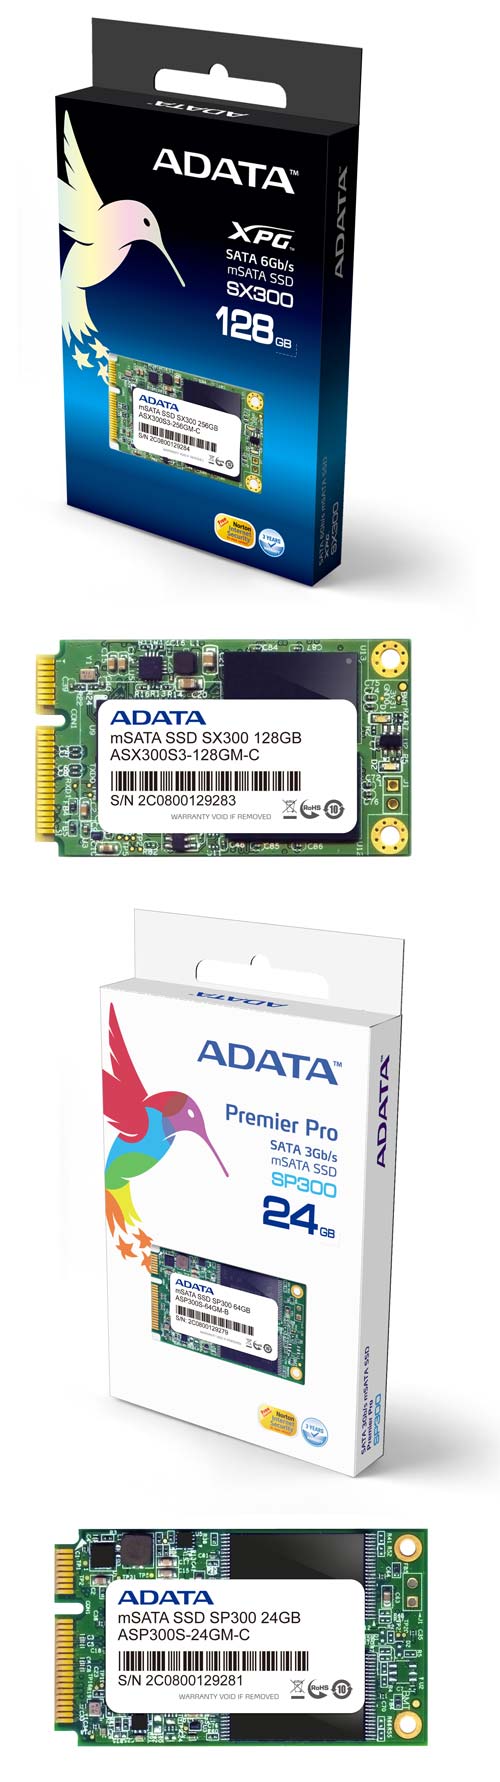 ADATA показывает mSATA SSD XPG SX300 и Premier Pro SP300